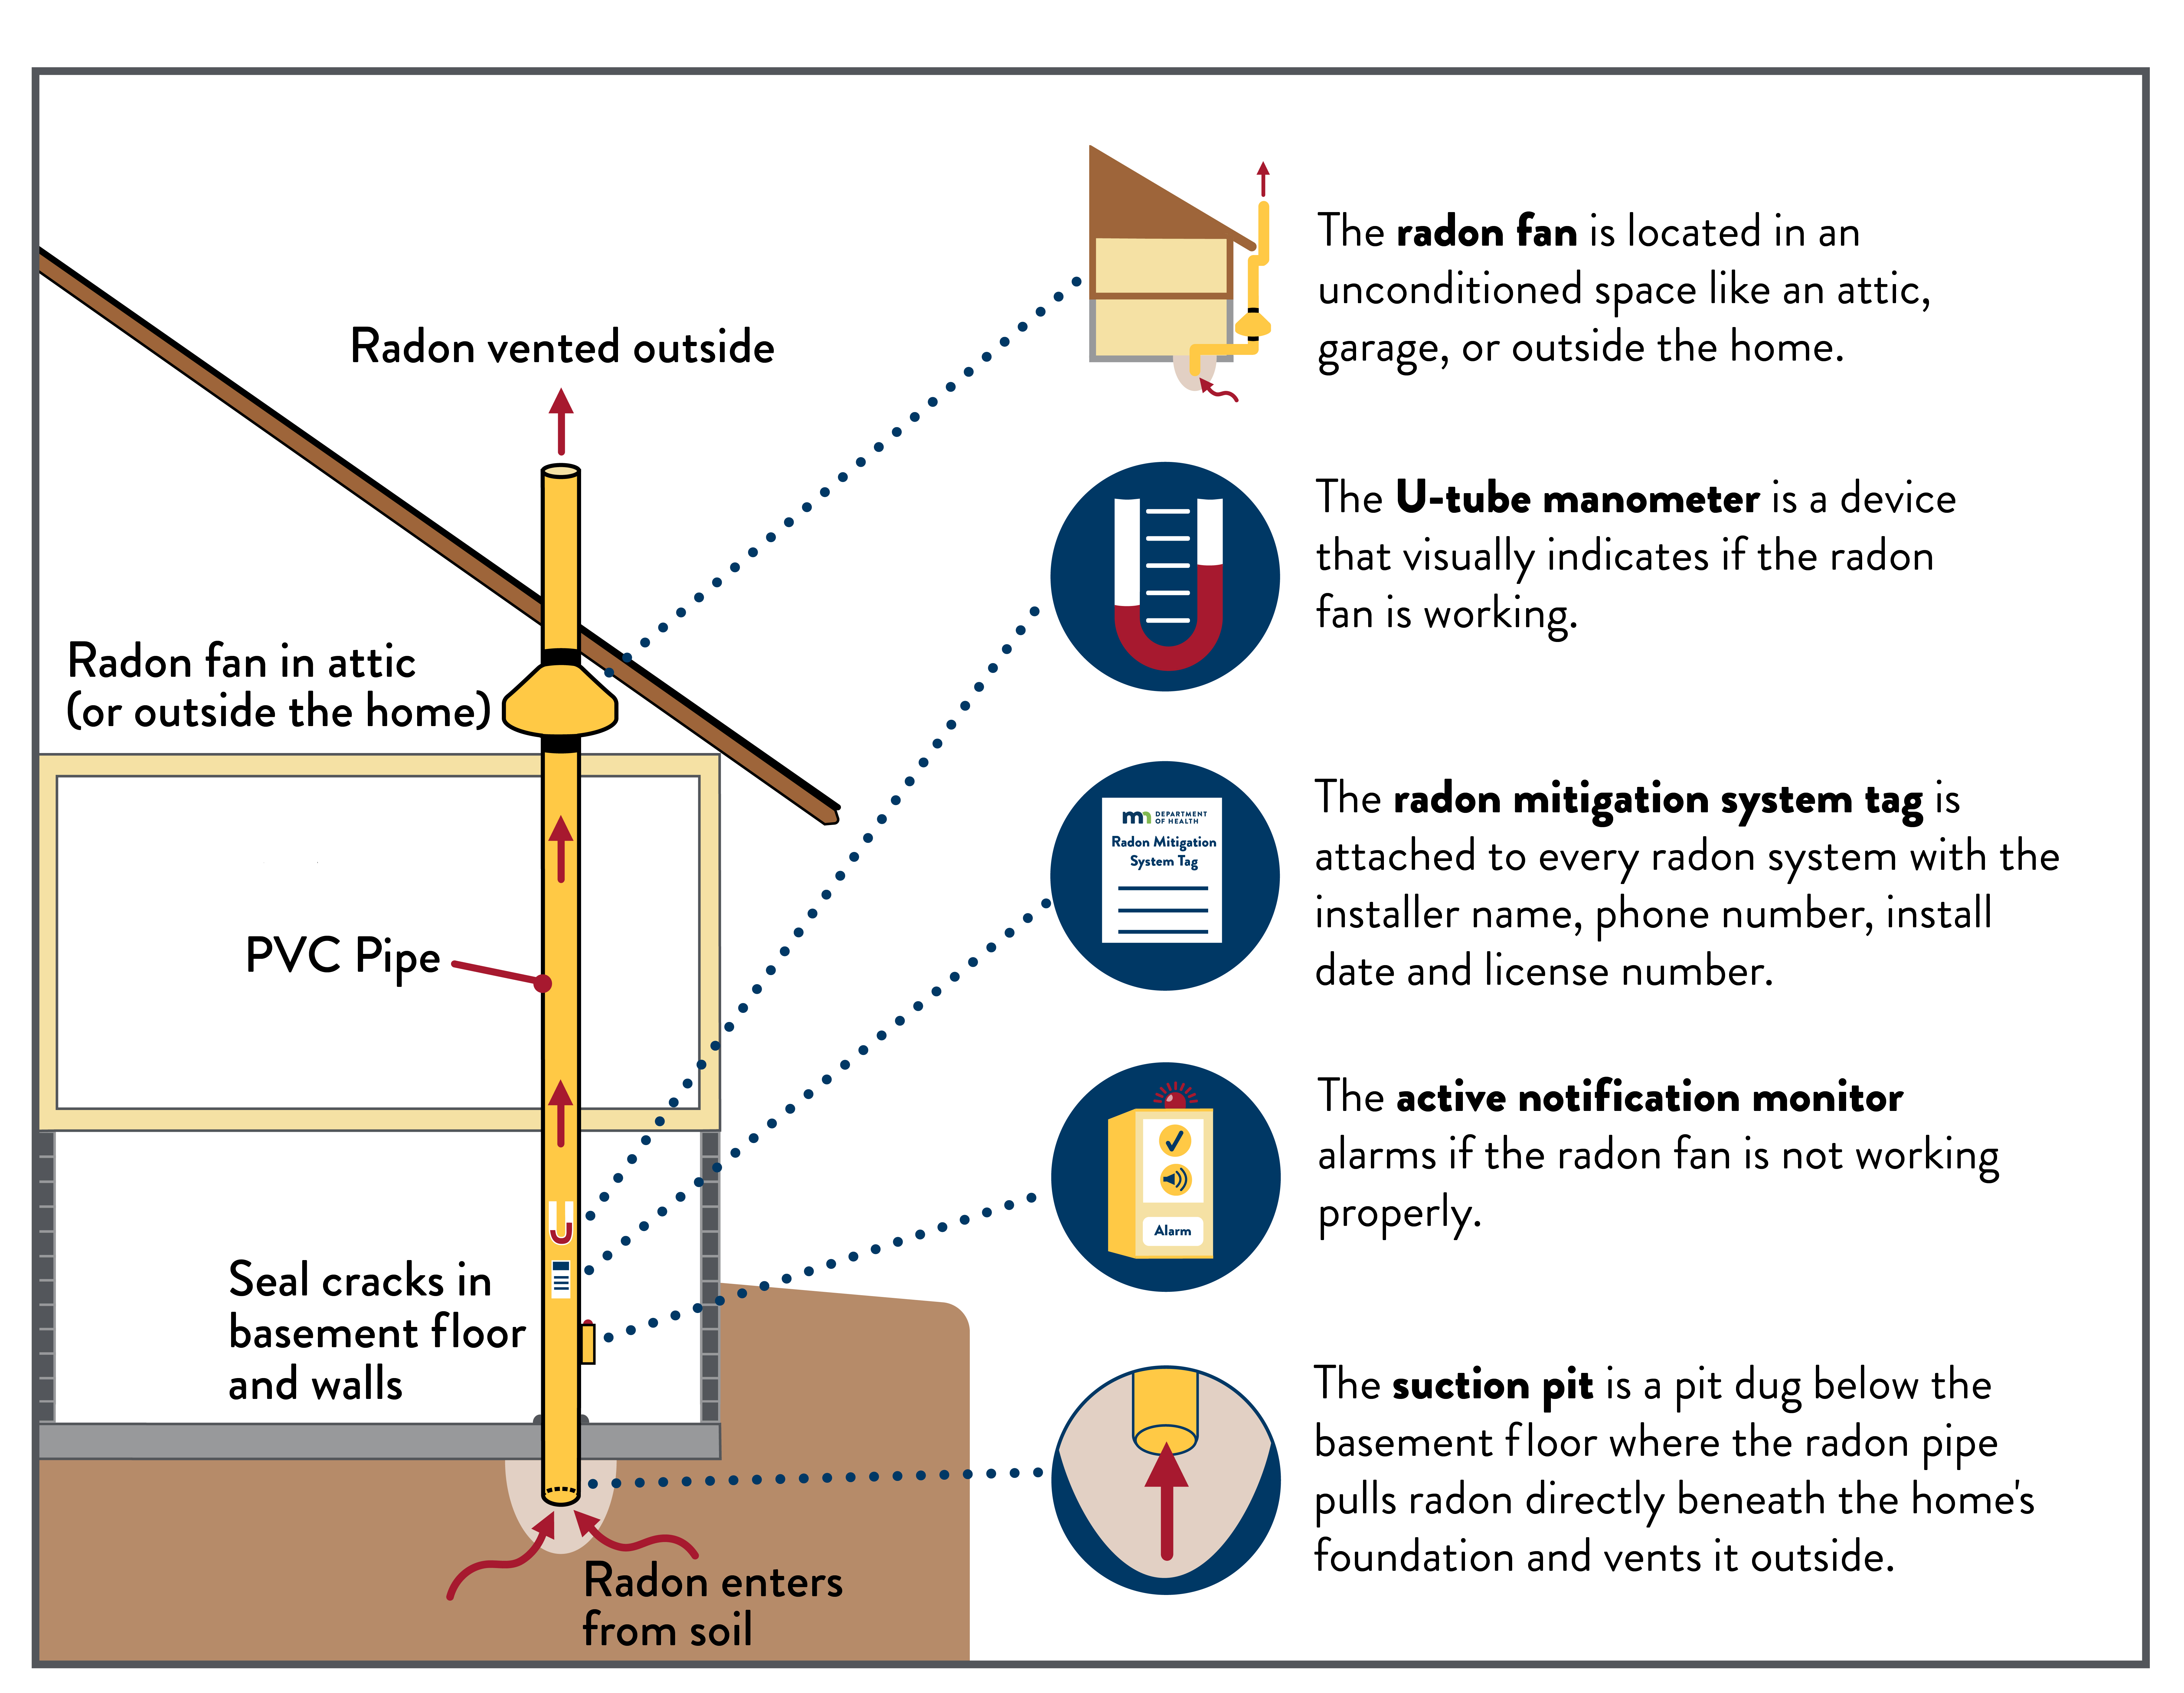 Radon mitigation system components